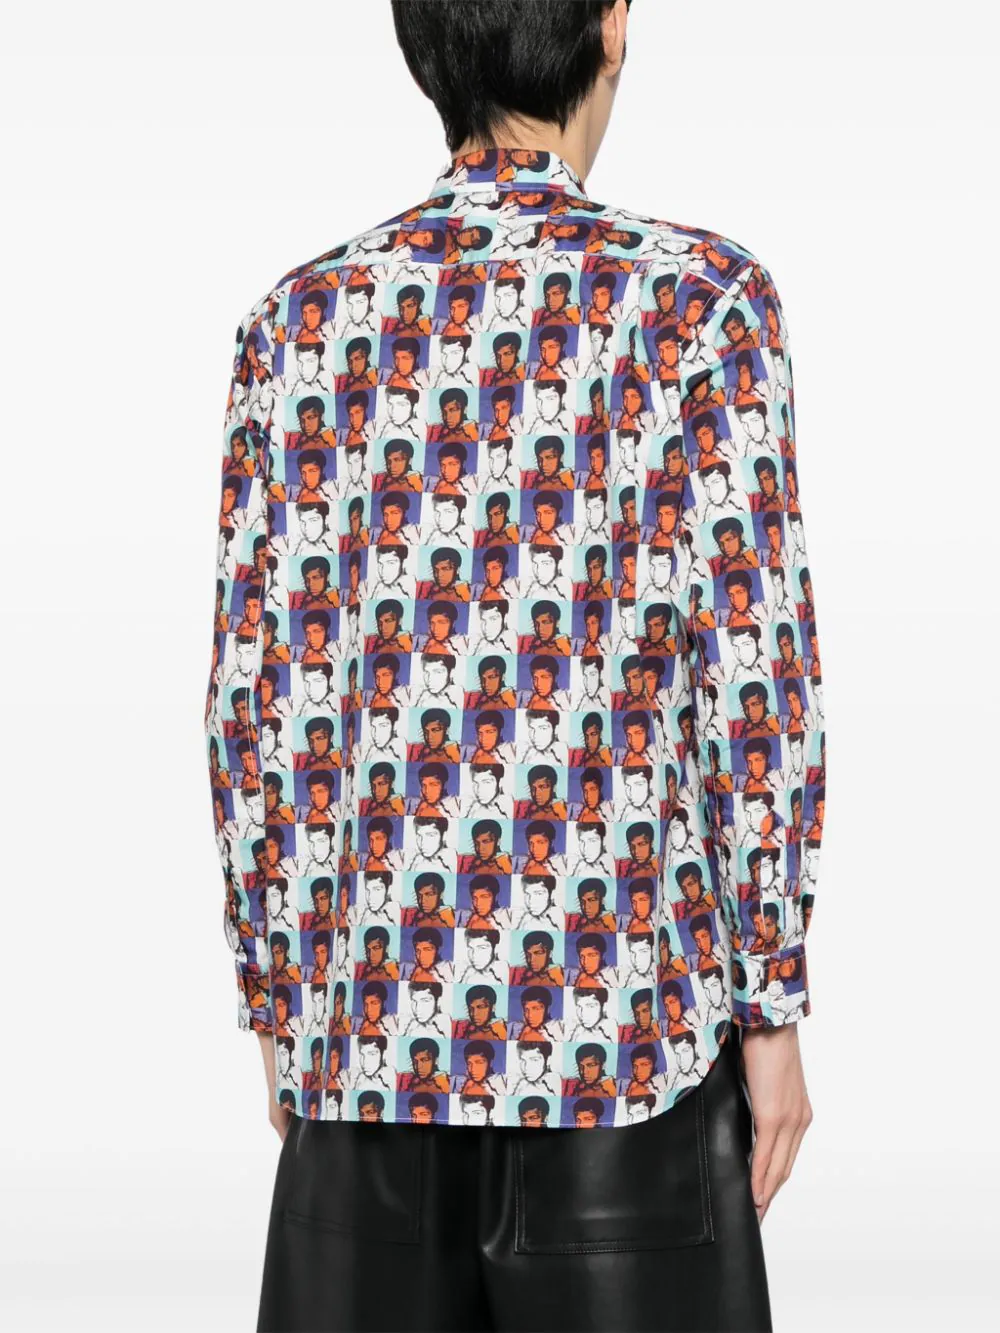 Andy Warhol Printed Dress Shirt